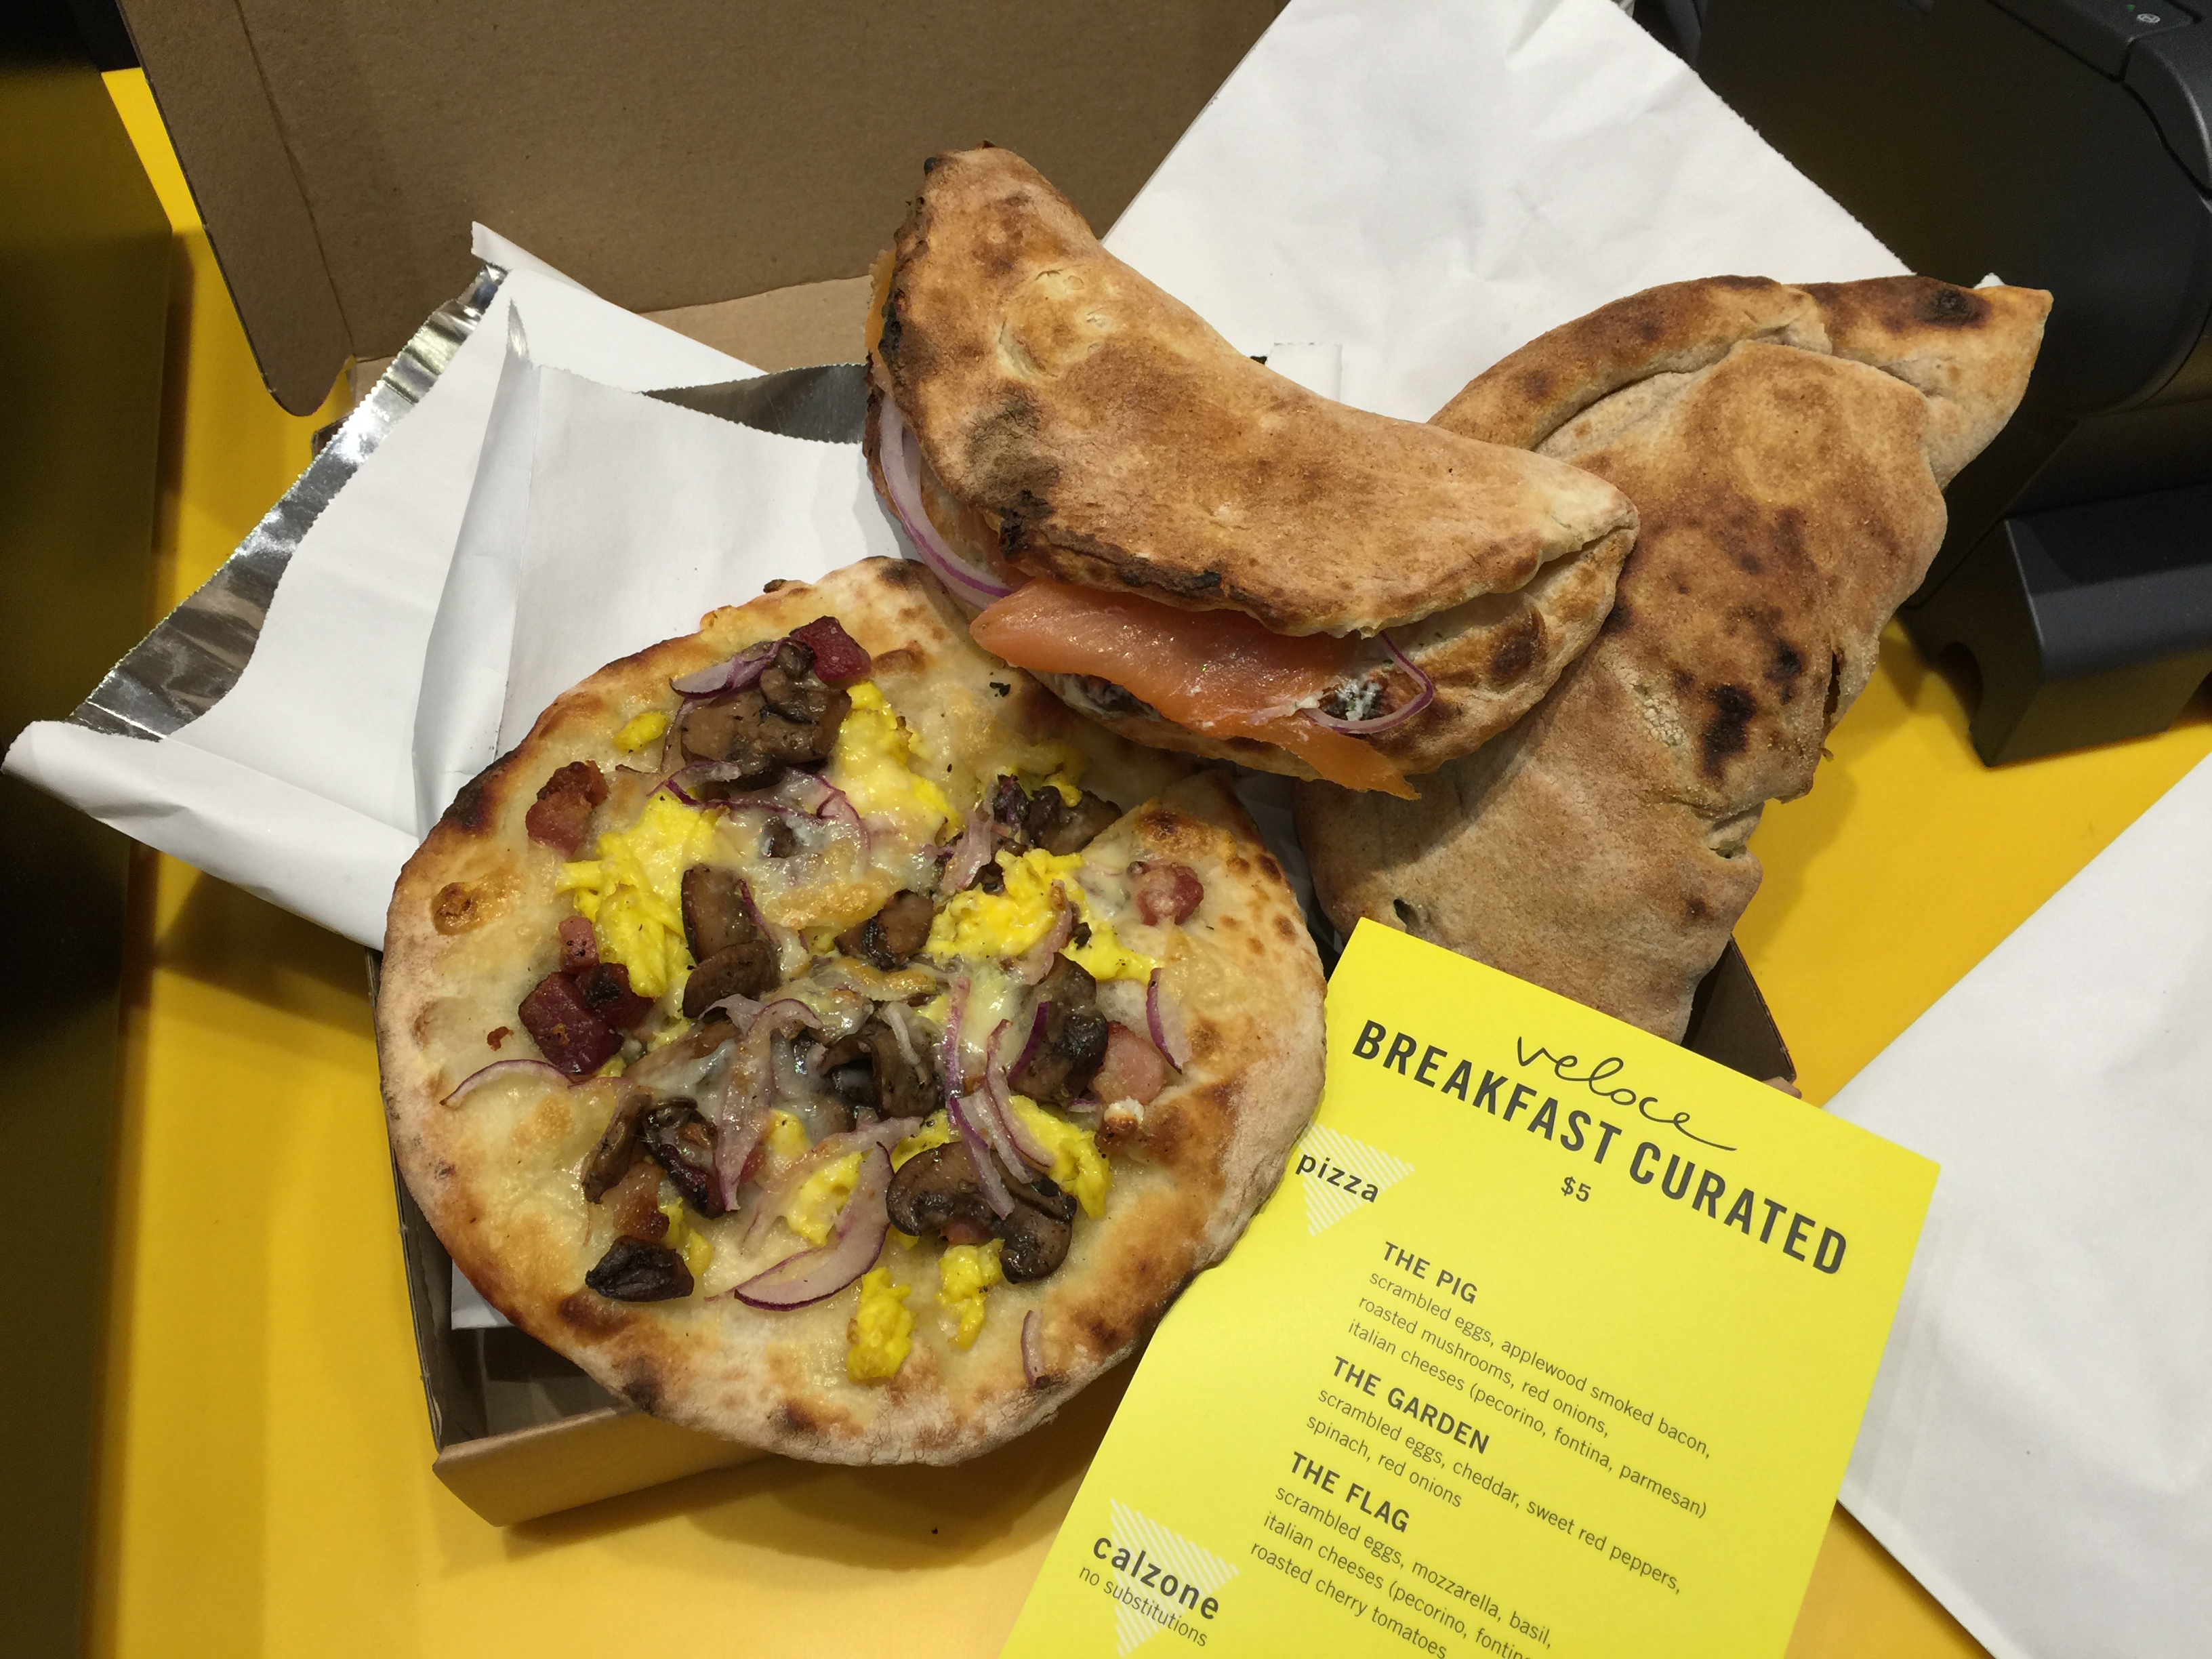 D.C.’s newest pizza spot has a new wrinkle: Breakfast